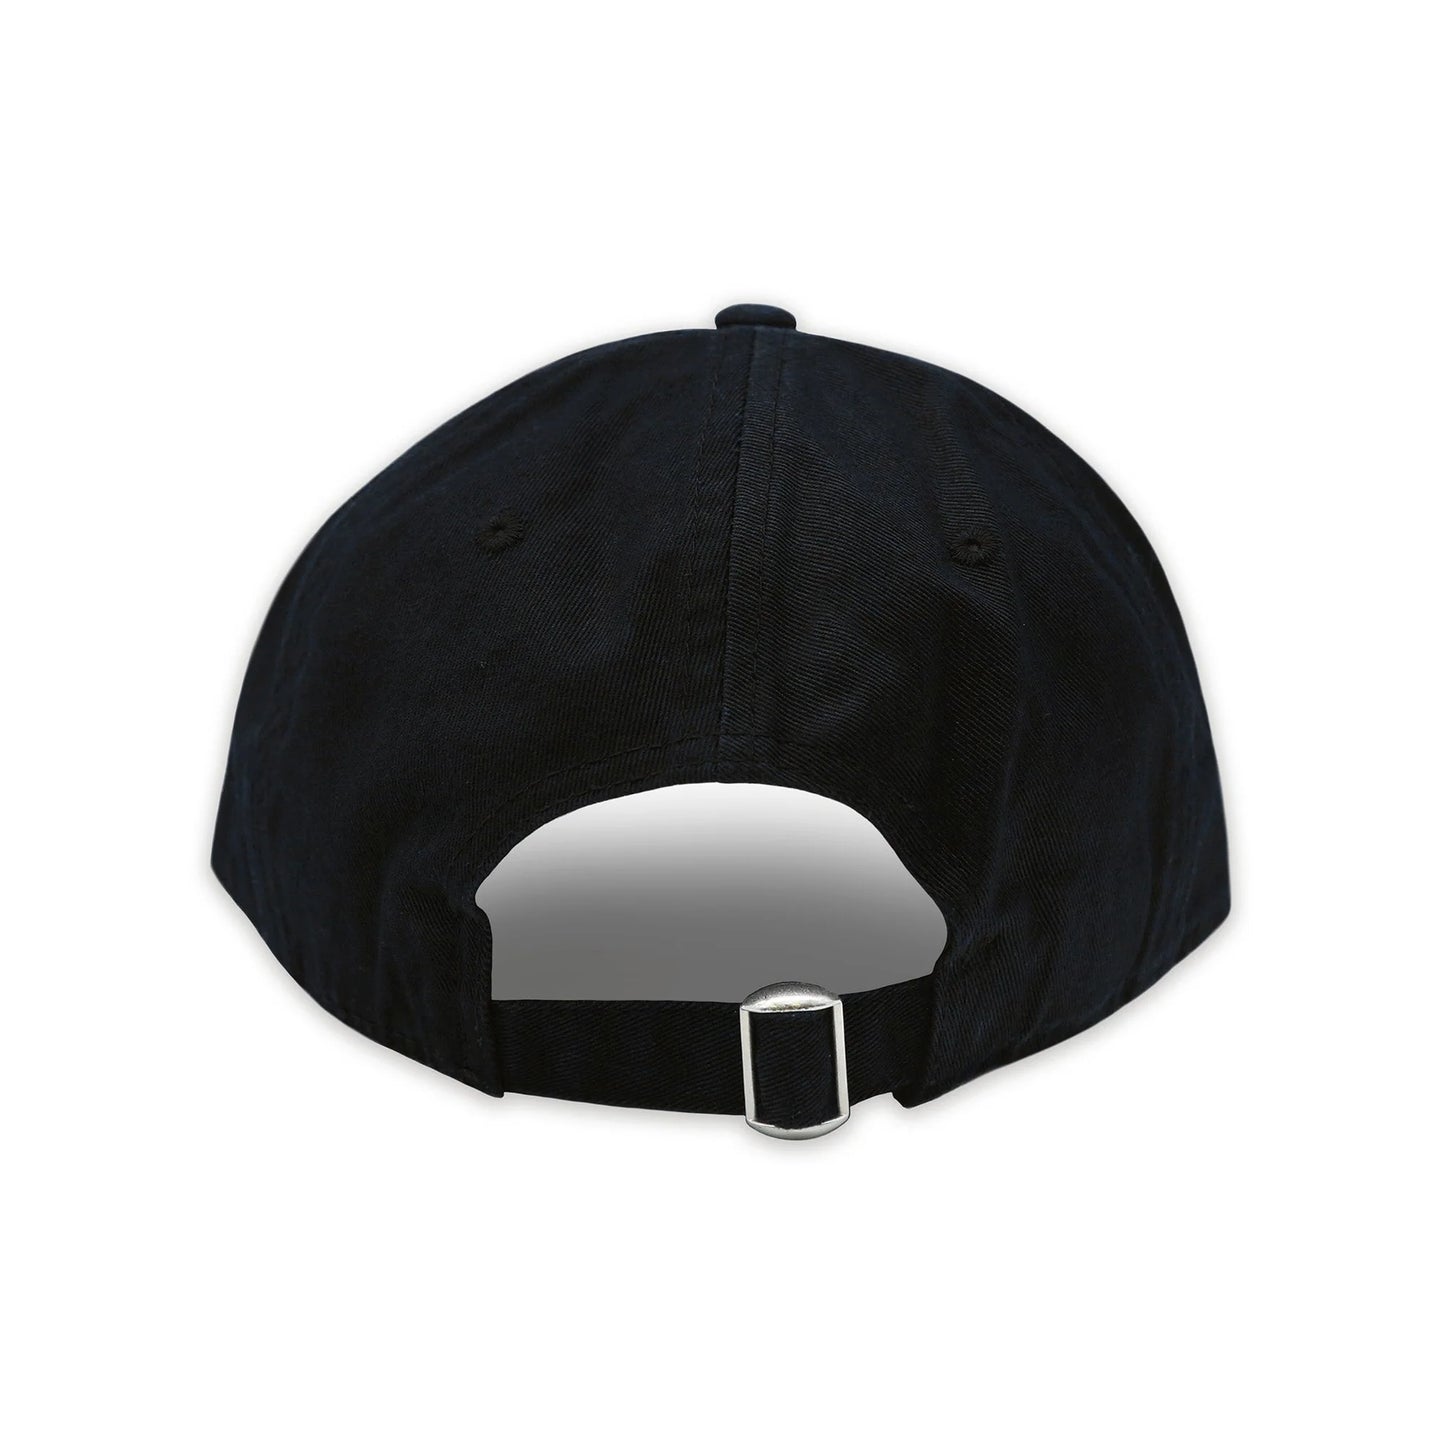 Smathers & Branson - Hats - Needlepoint - Findlay Rowe Designs